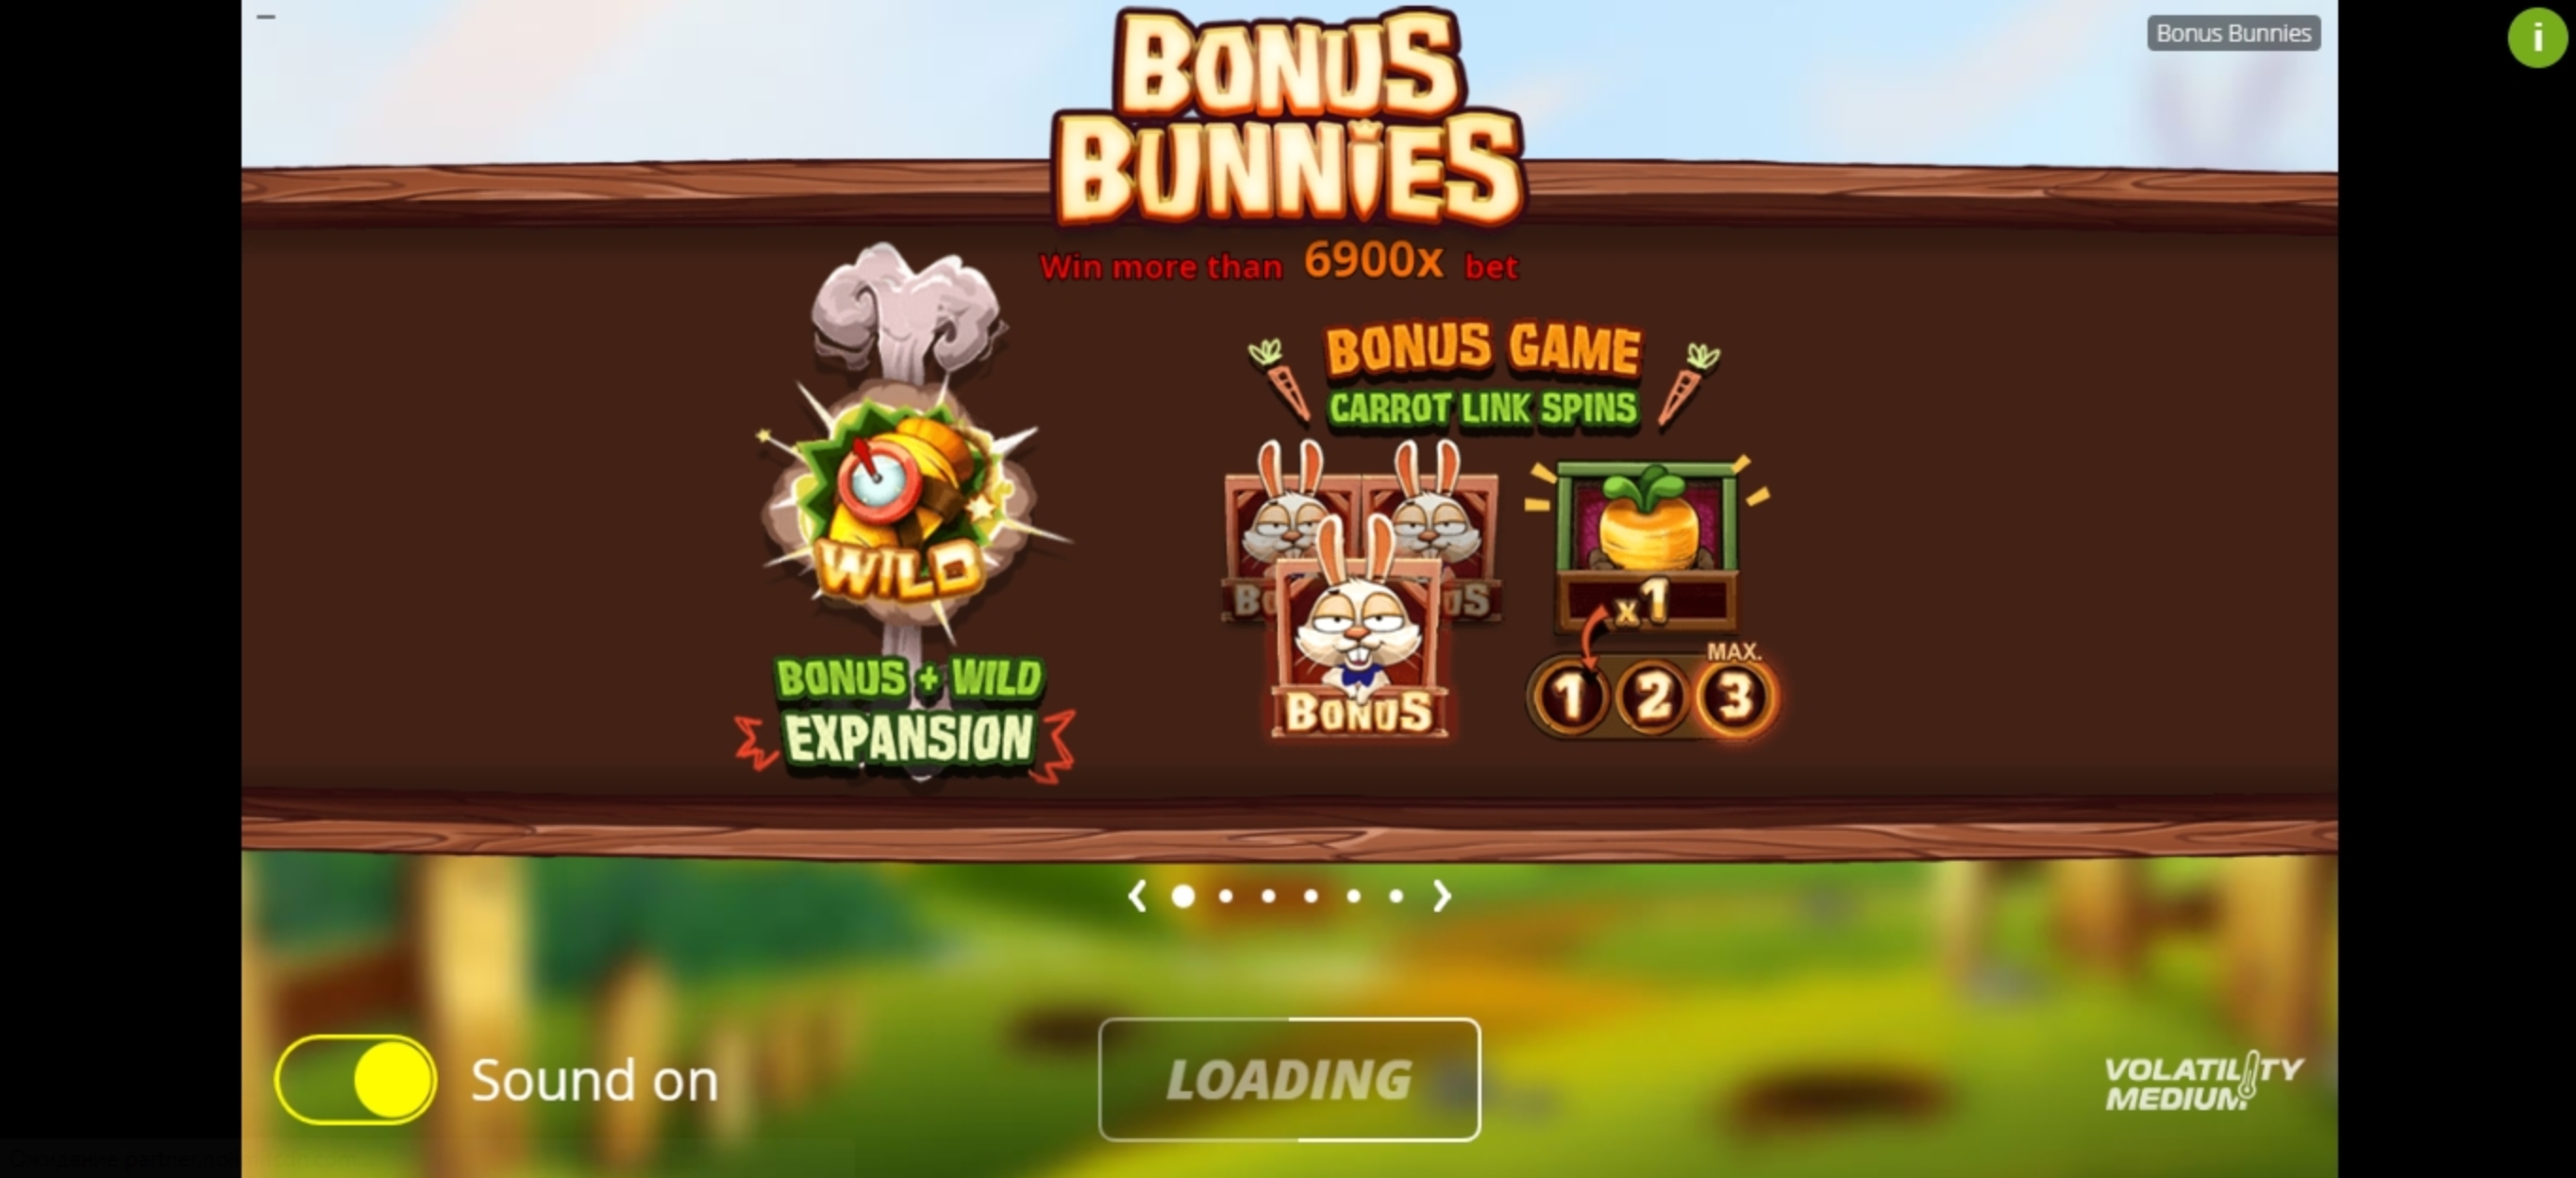 Play Bonus Bunnies Free Casino Slot Game by Nolimit City